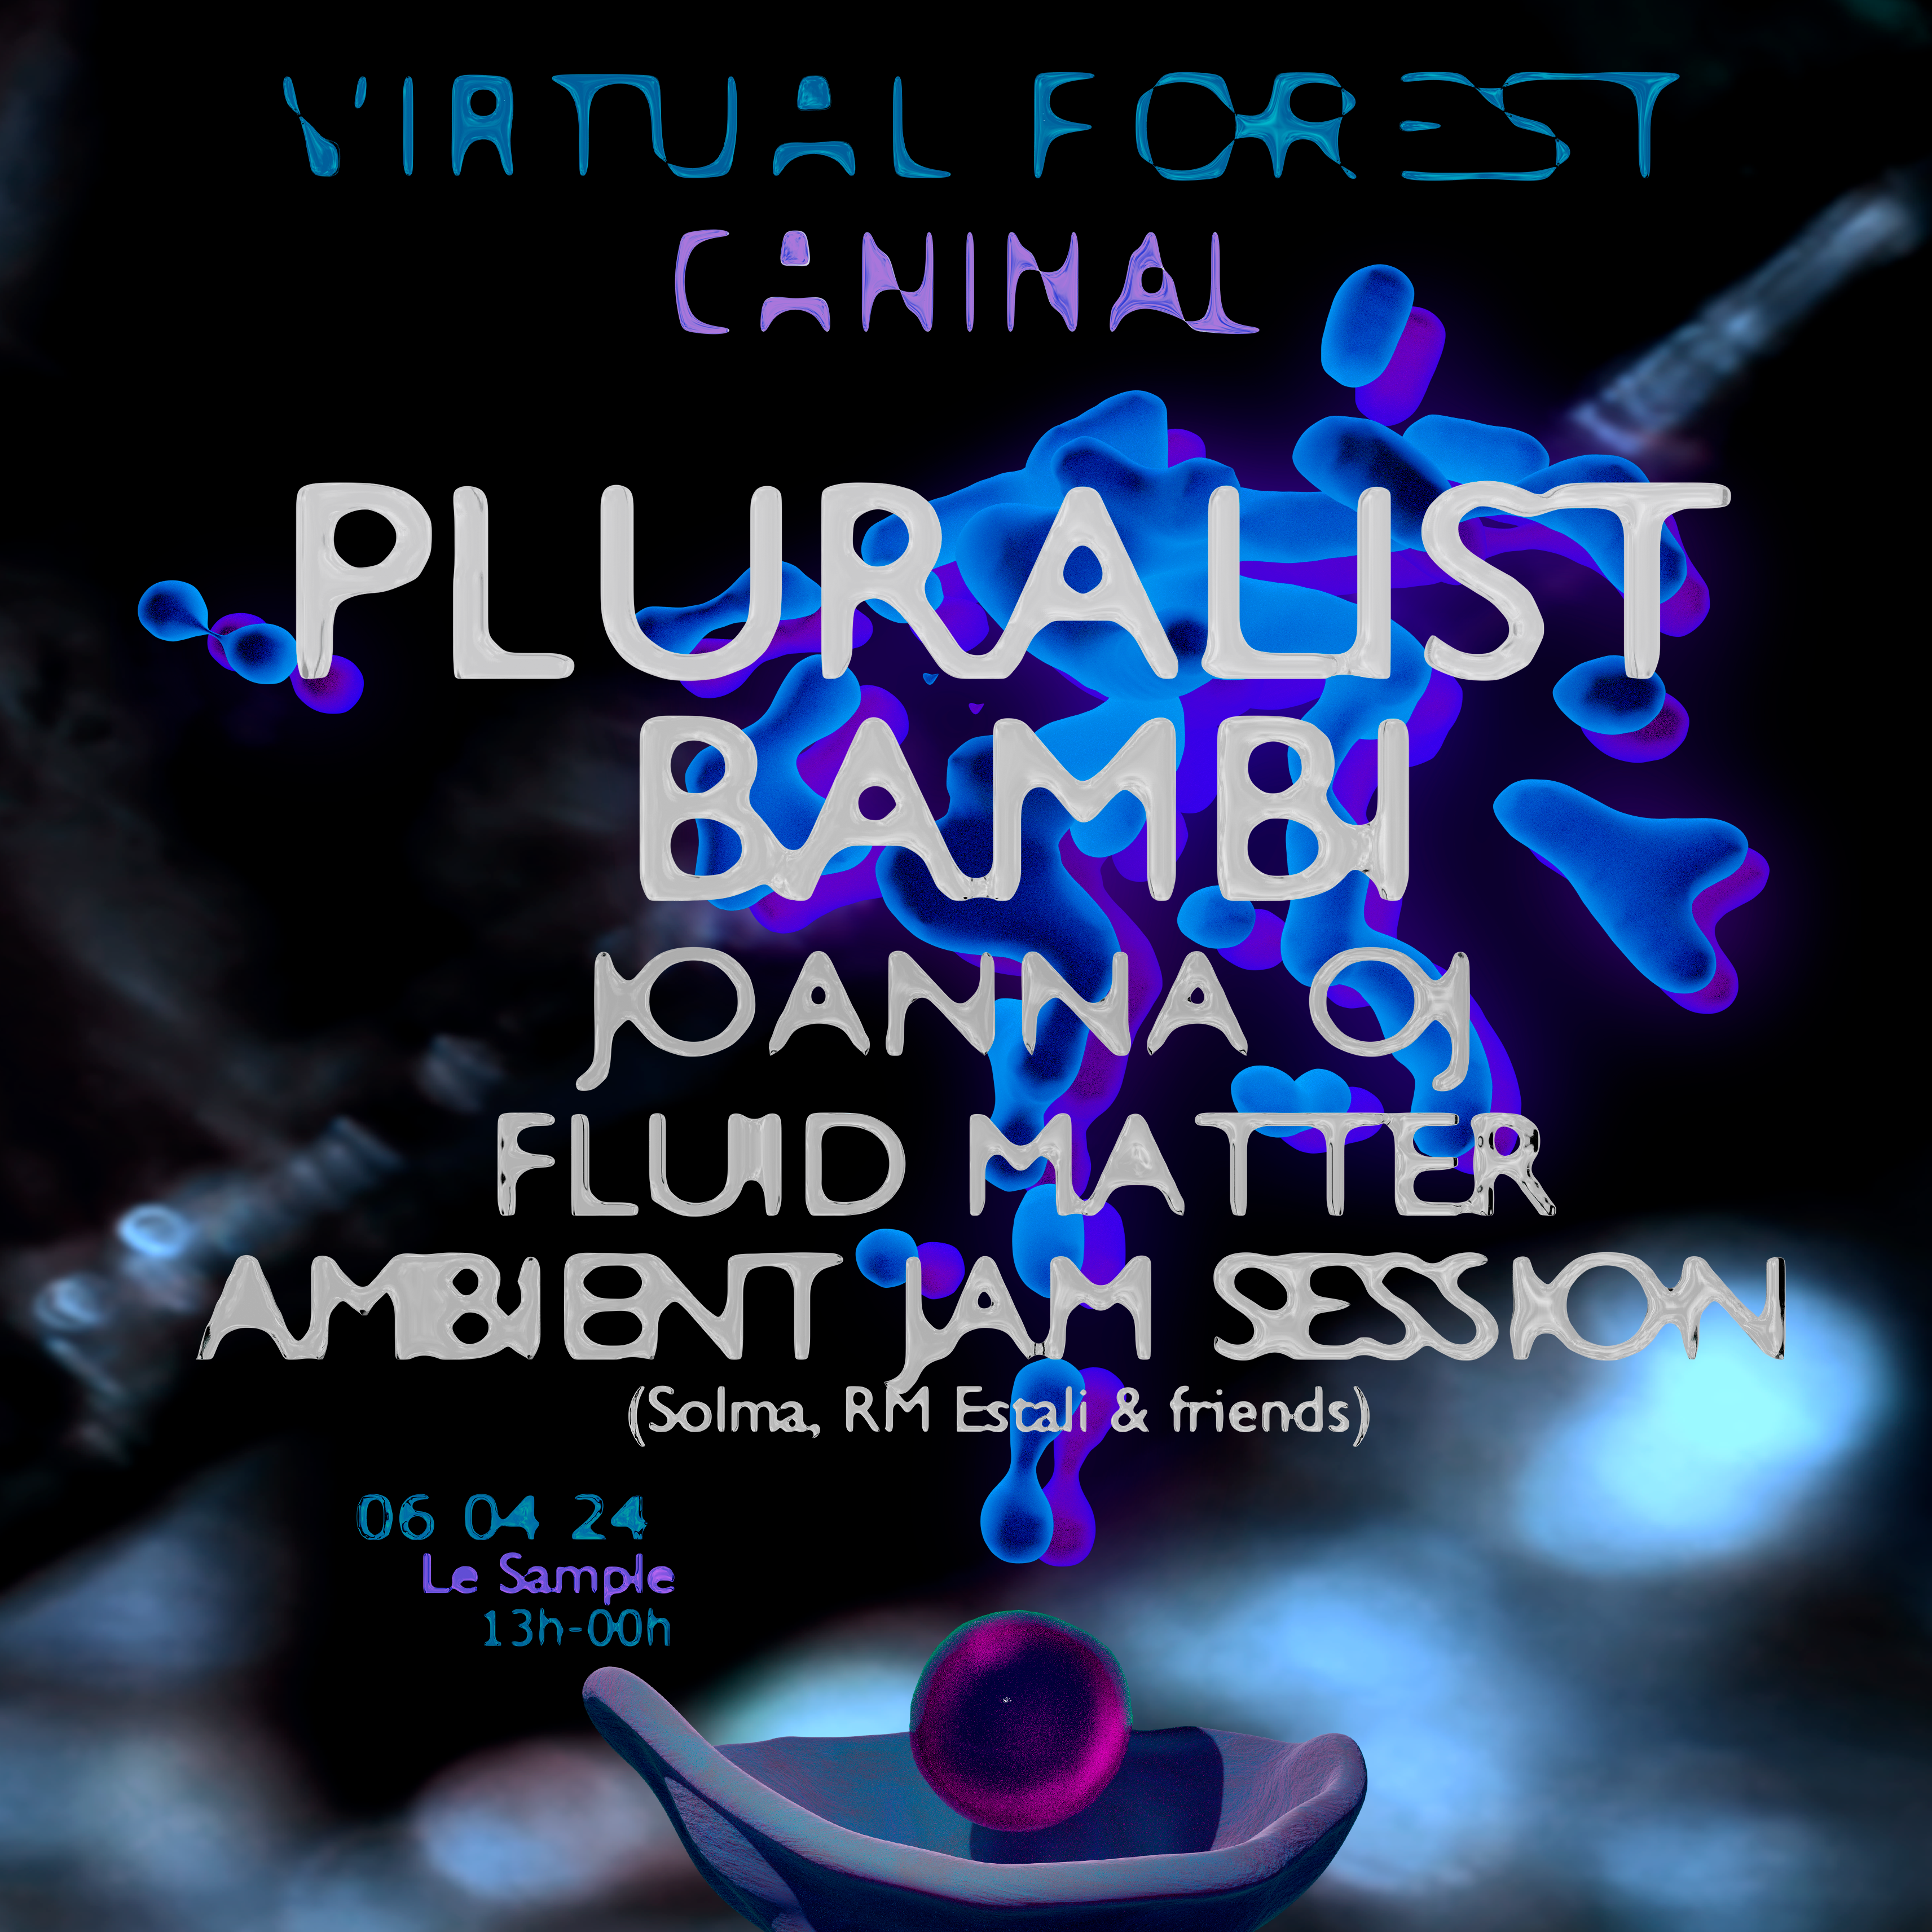 CANINAL ✢ VIRTUAL FOREST: Pluralist, Bambi, Joanna OJ, Fluid Matter, Ambient Jam Session - Página frontal